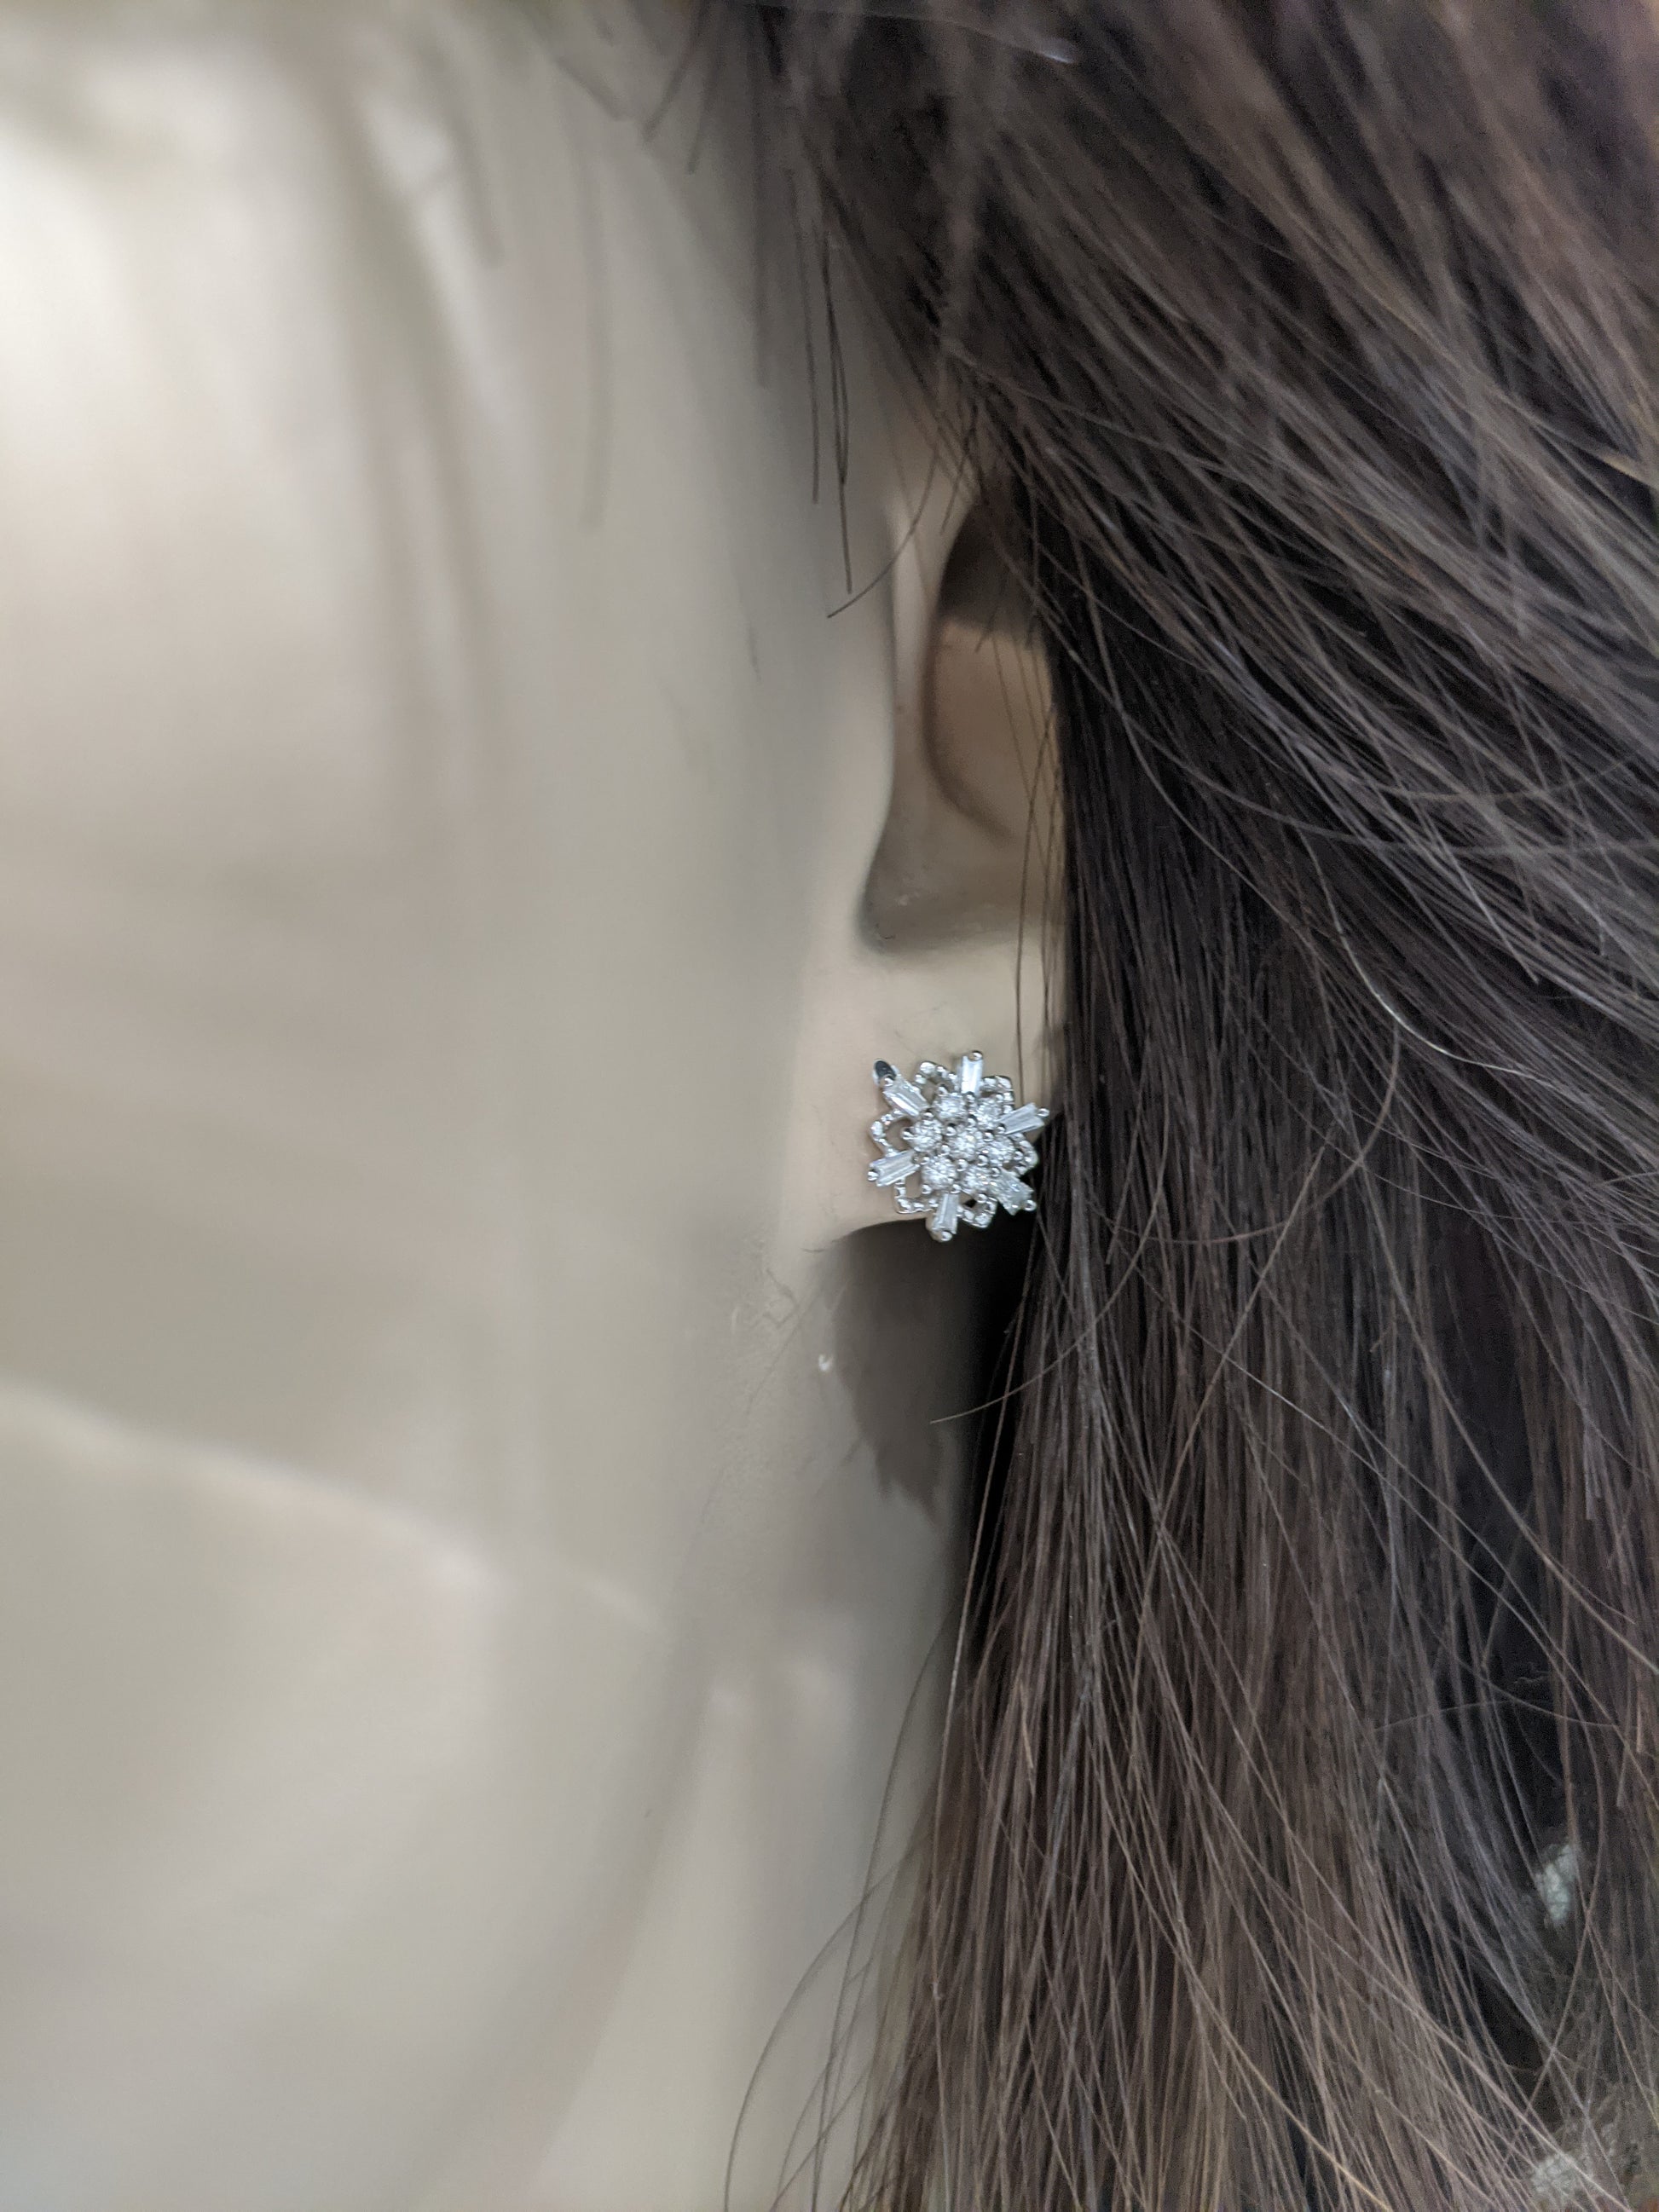 14K Gold And Diamond Star Stud Earrings - HK Jewels